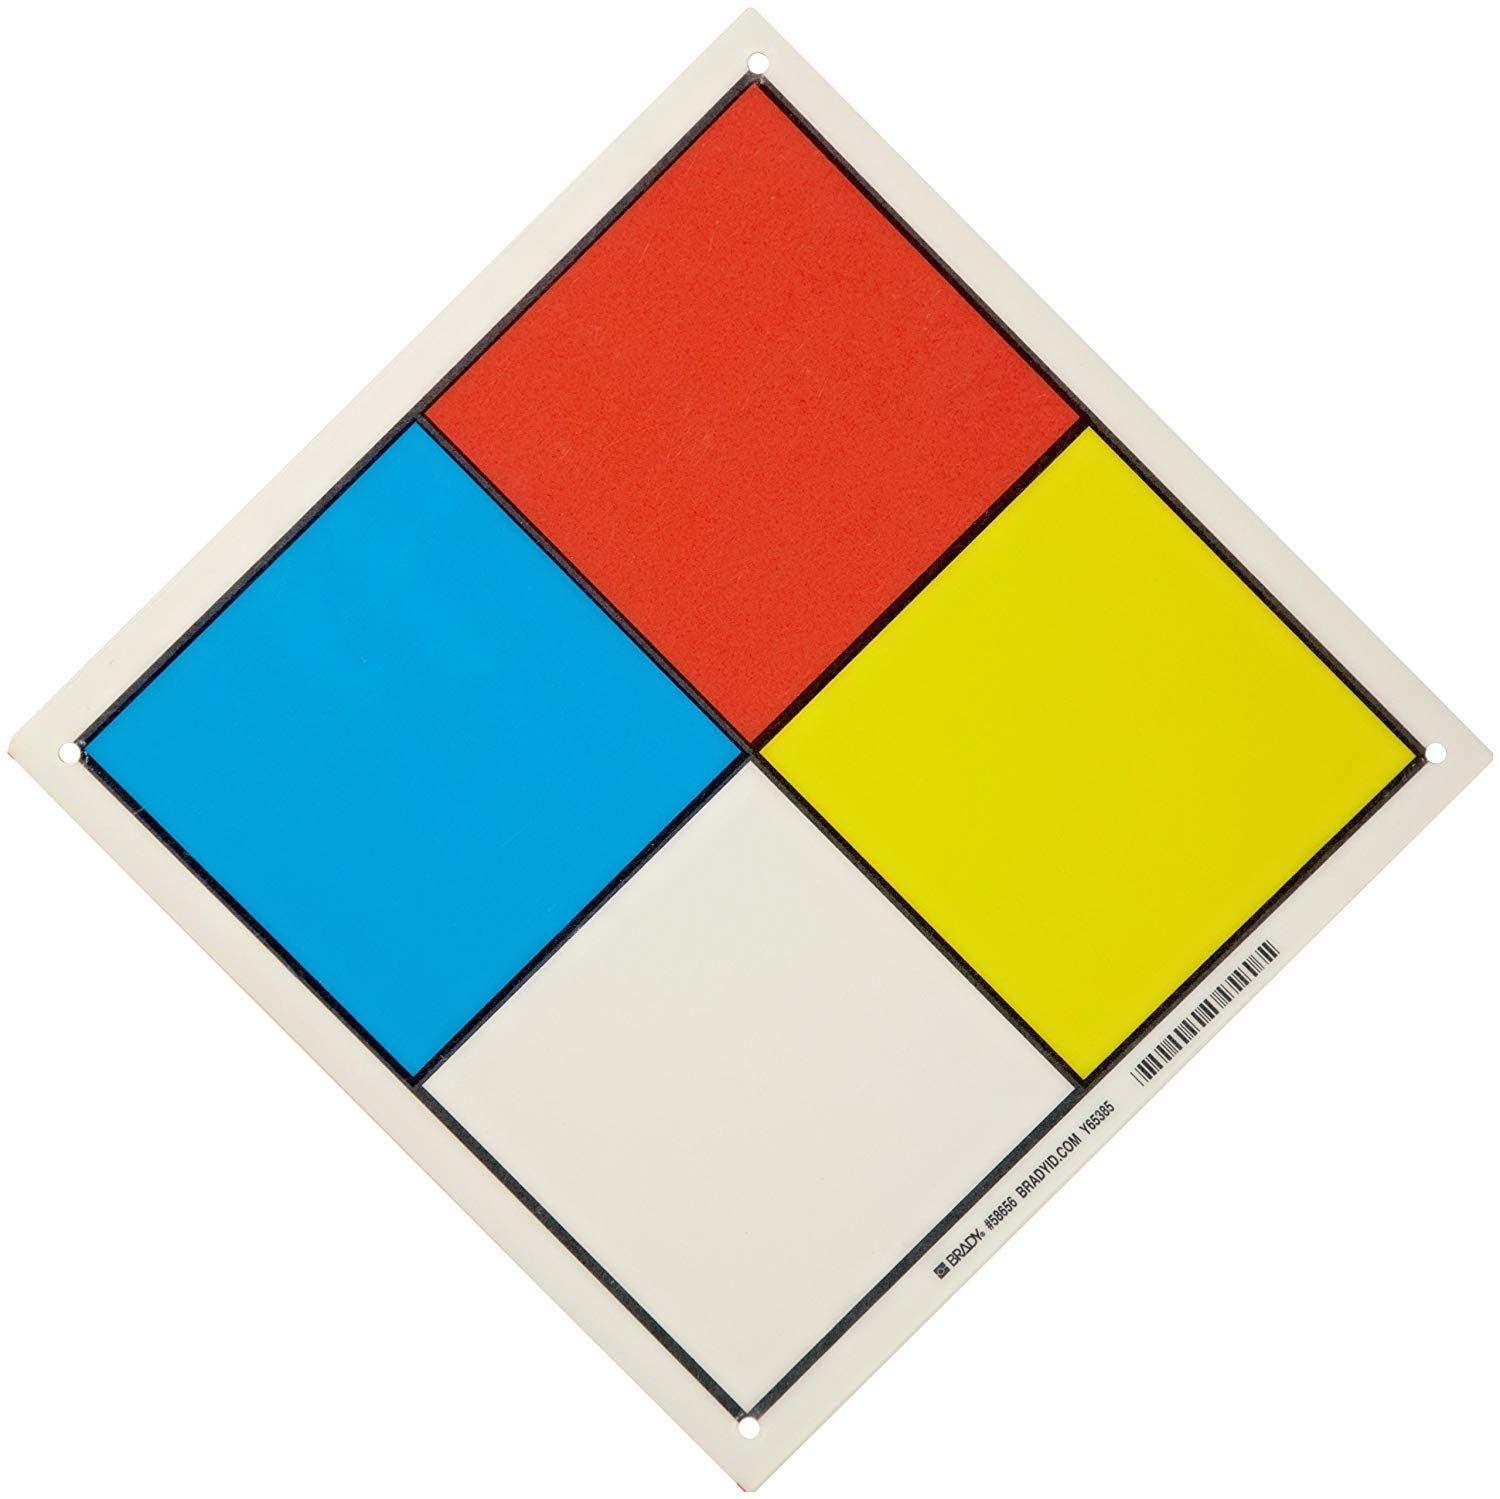 Square White with Orange B Logo - Brady 58656 11 Square, B 120 Premium Fiberglass, Black, Red, Blue